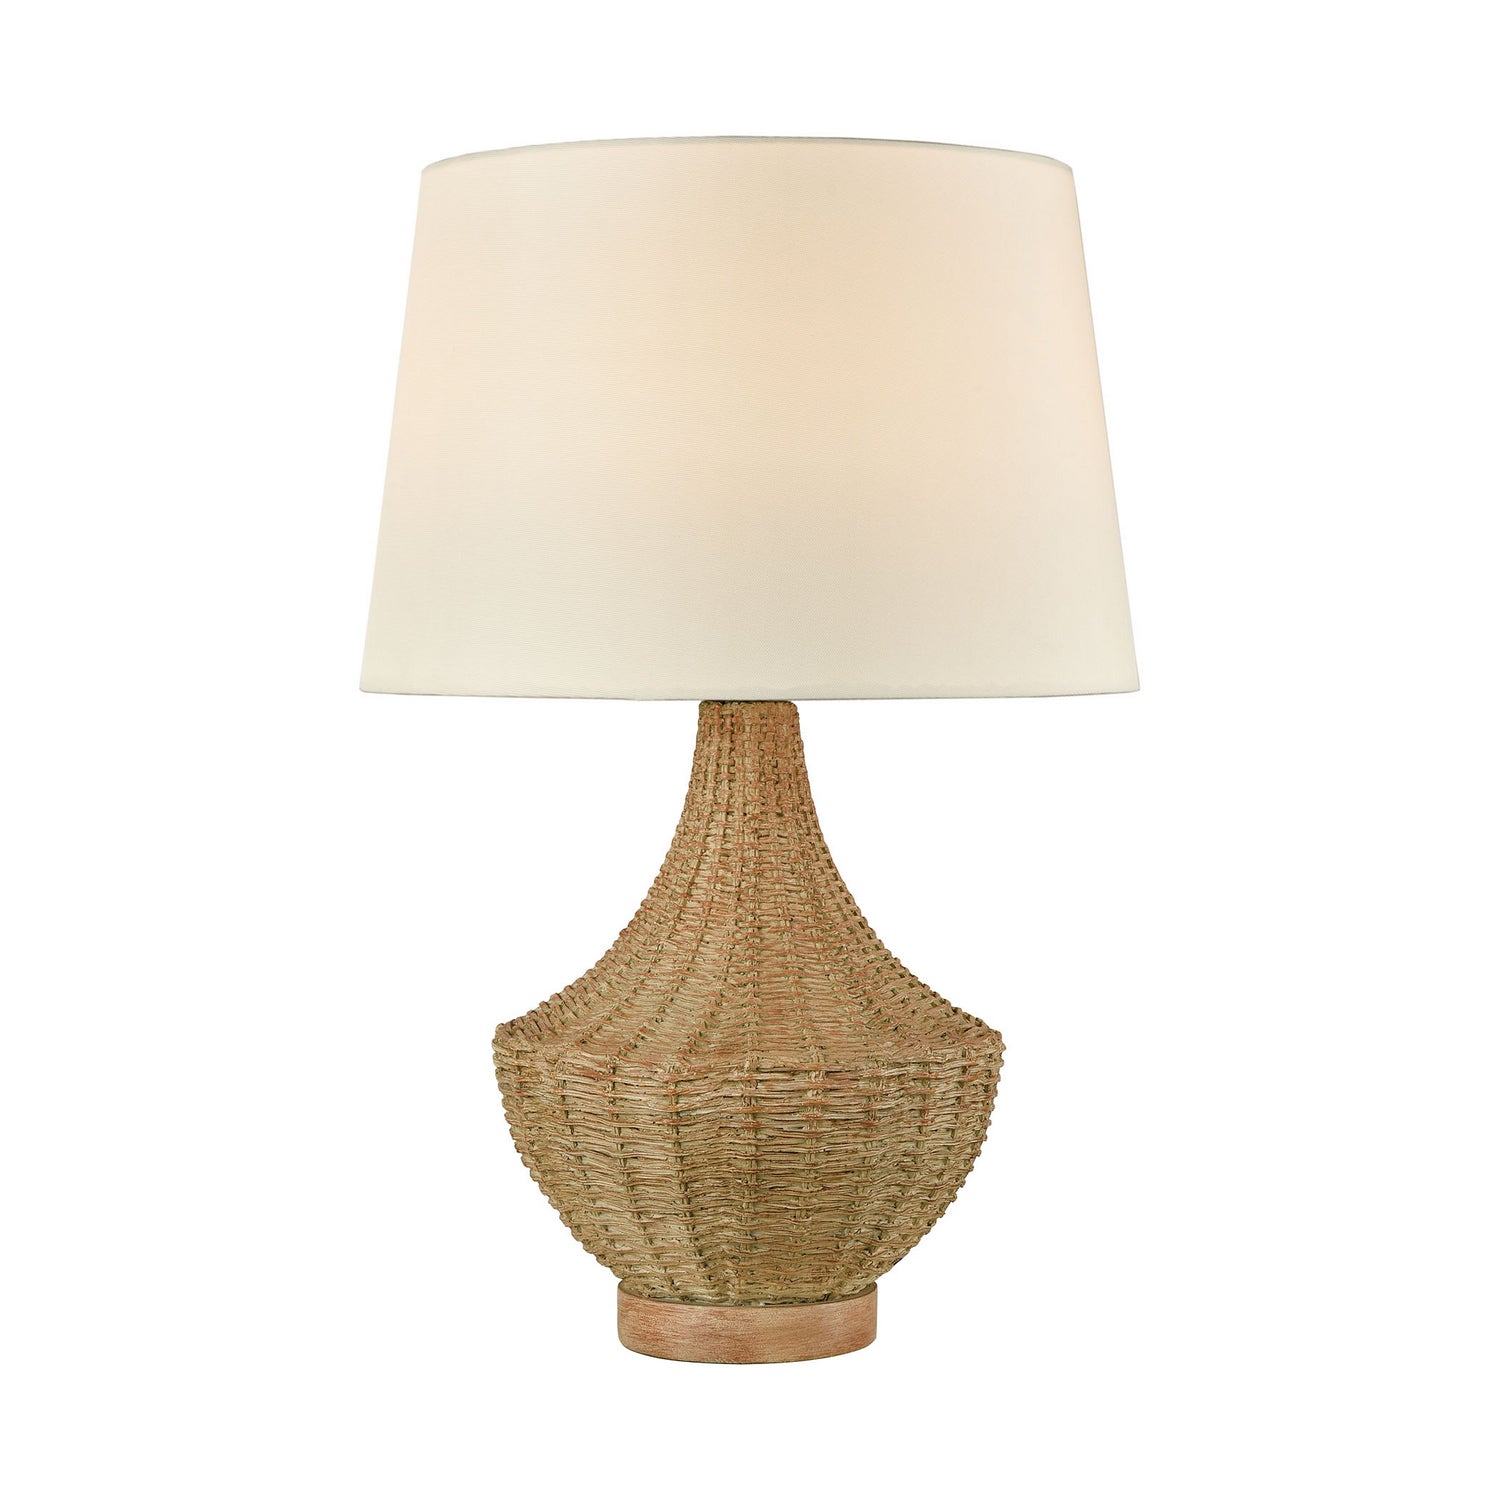 ELK Home - D4545 - One Light Table Lamp - Rafiq - Natural